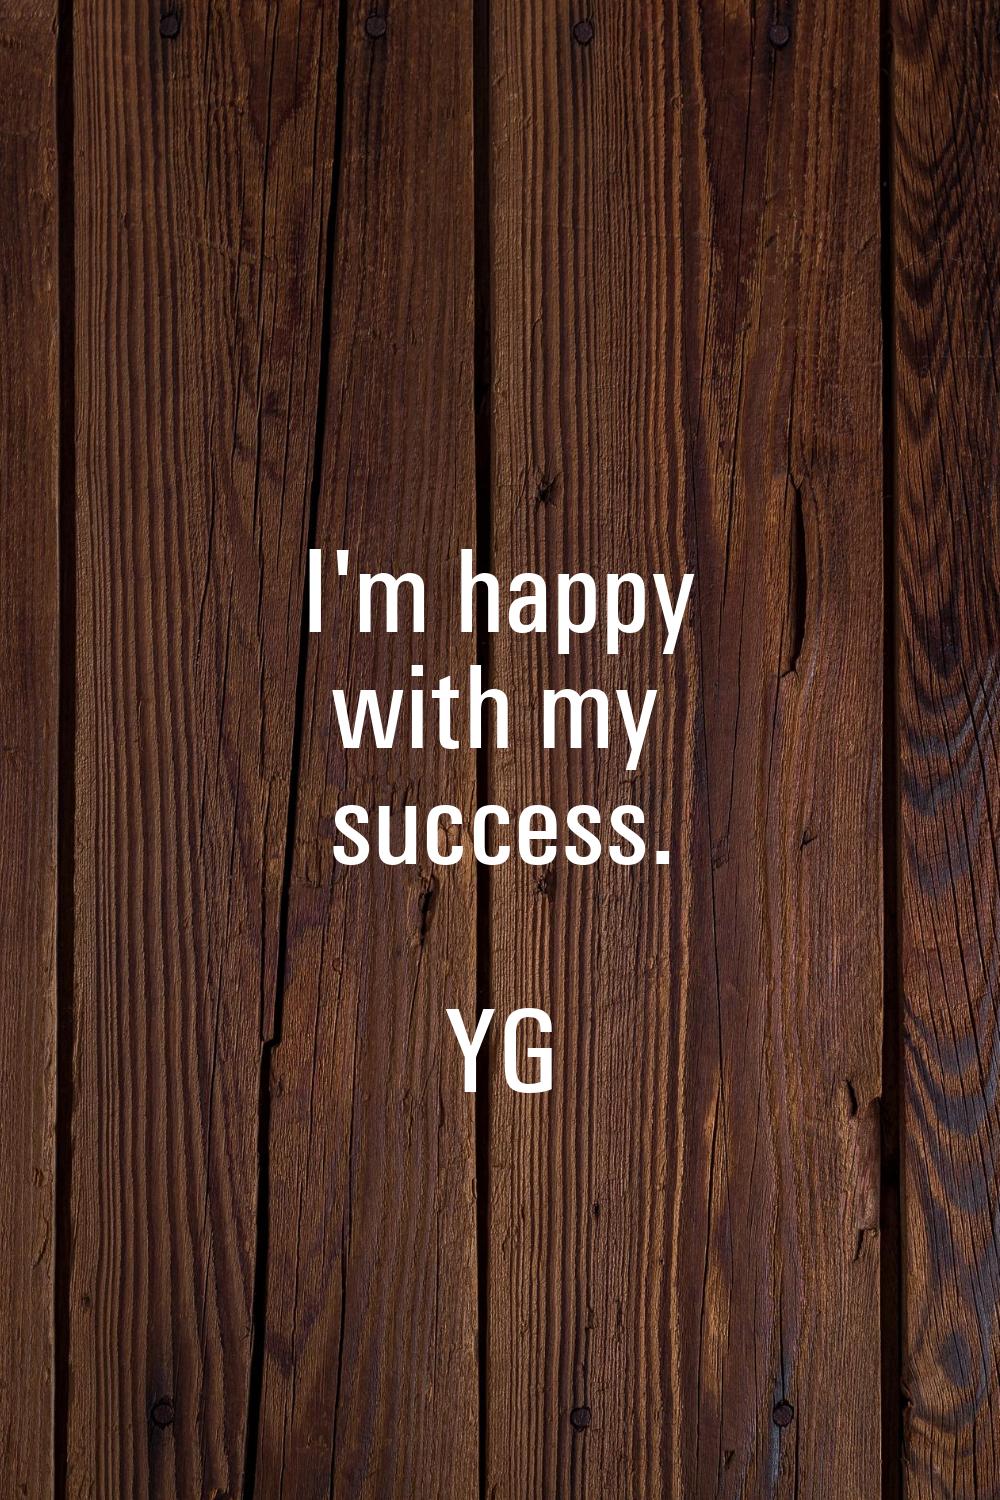 I'm happy with my success.